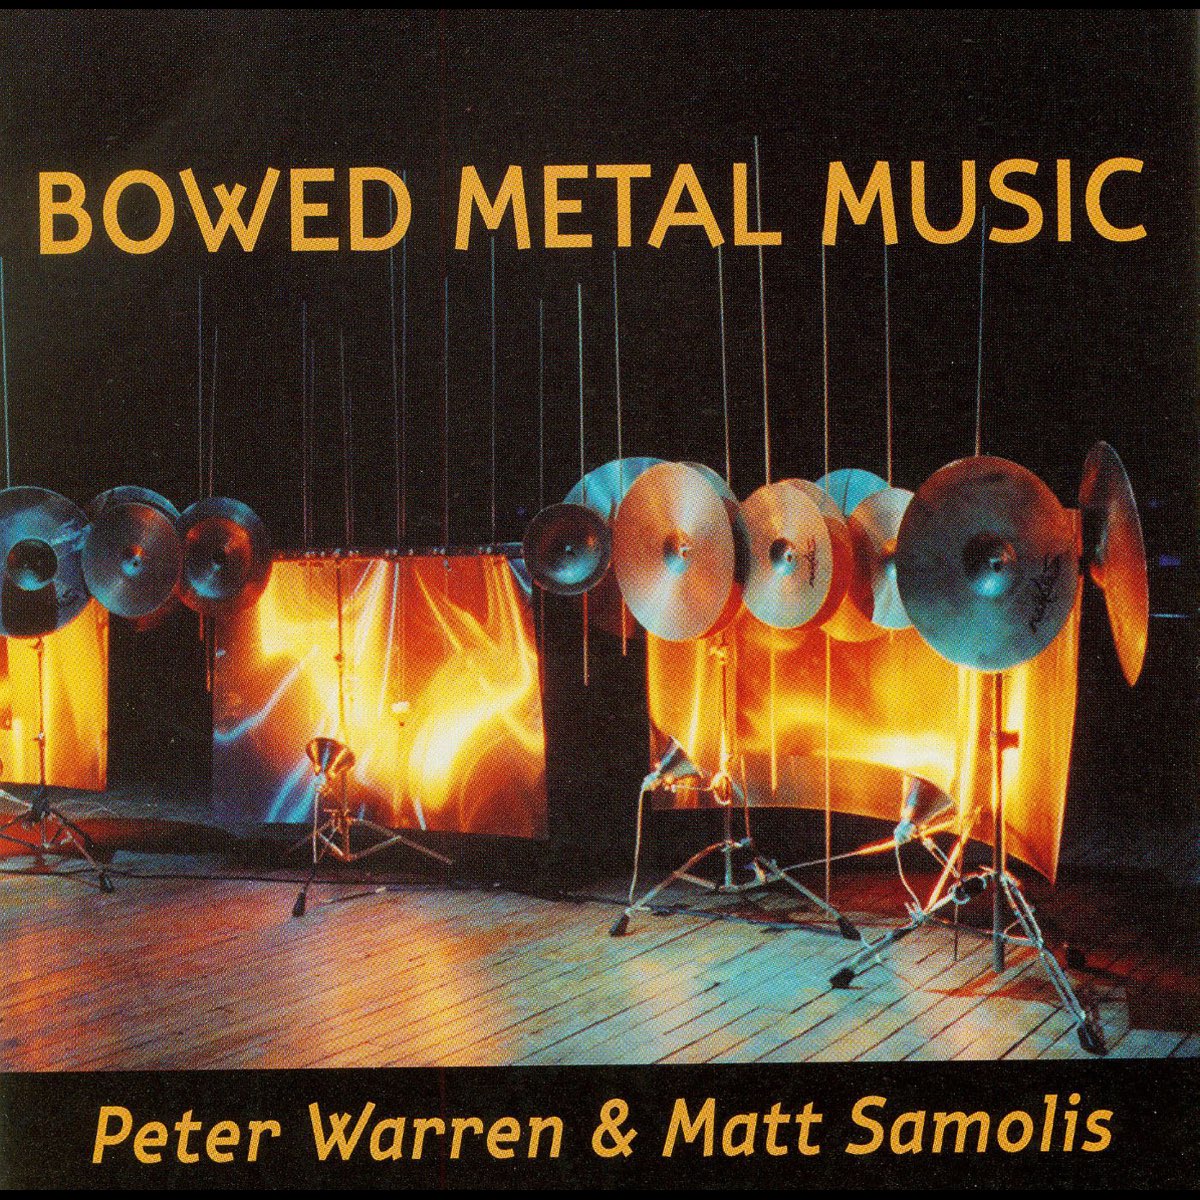 Warren & Samolis: Bowed Metal Music - Album by Peter Warren & Matt Samolis  - Apple Music